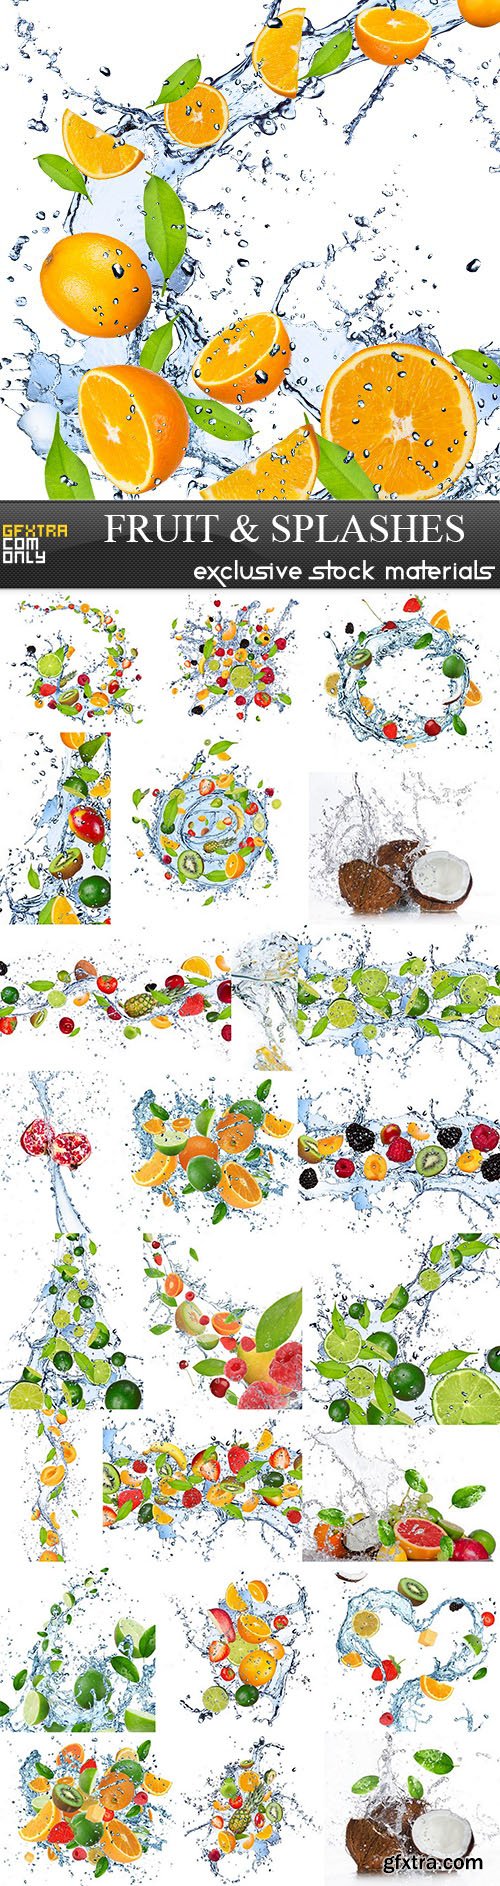 Fruit & Splashes, - 25xUHQ JPEG